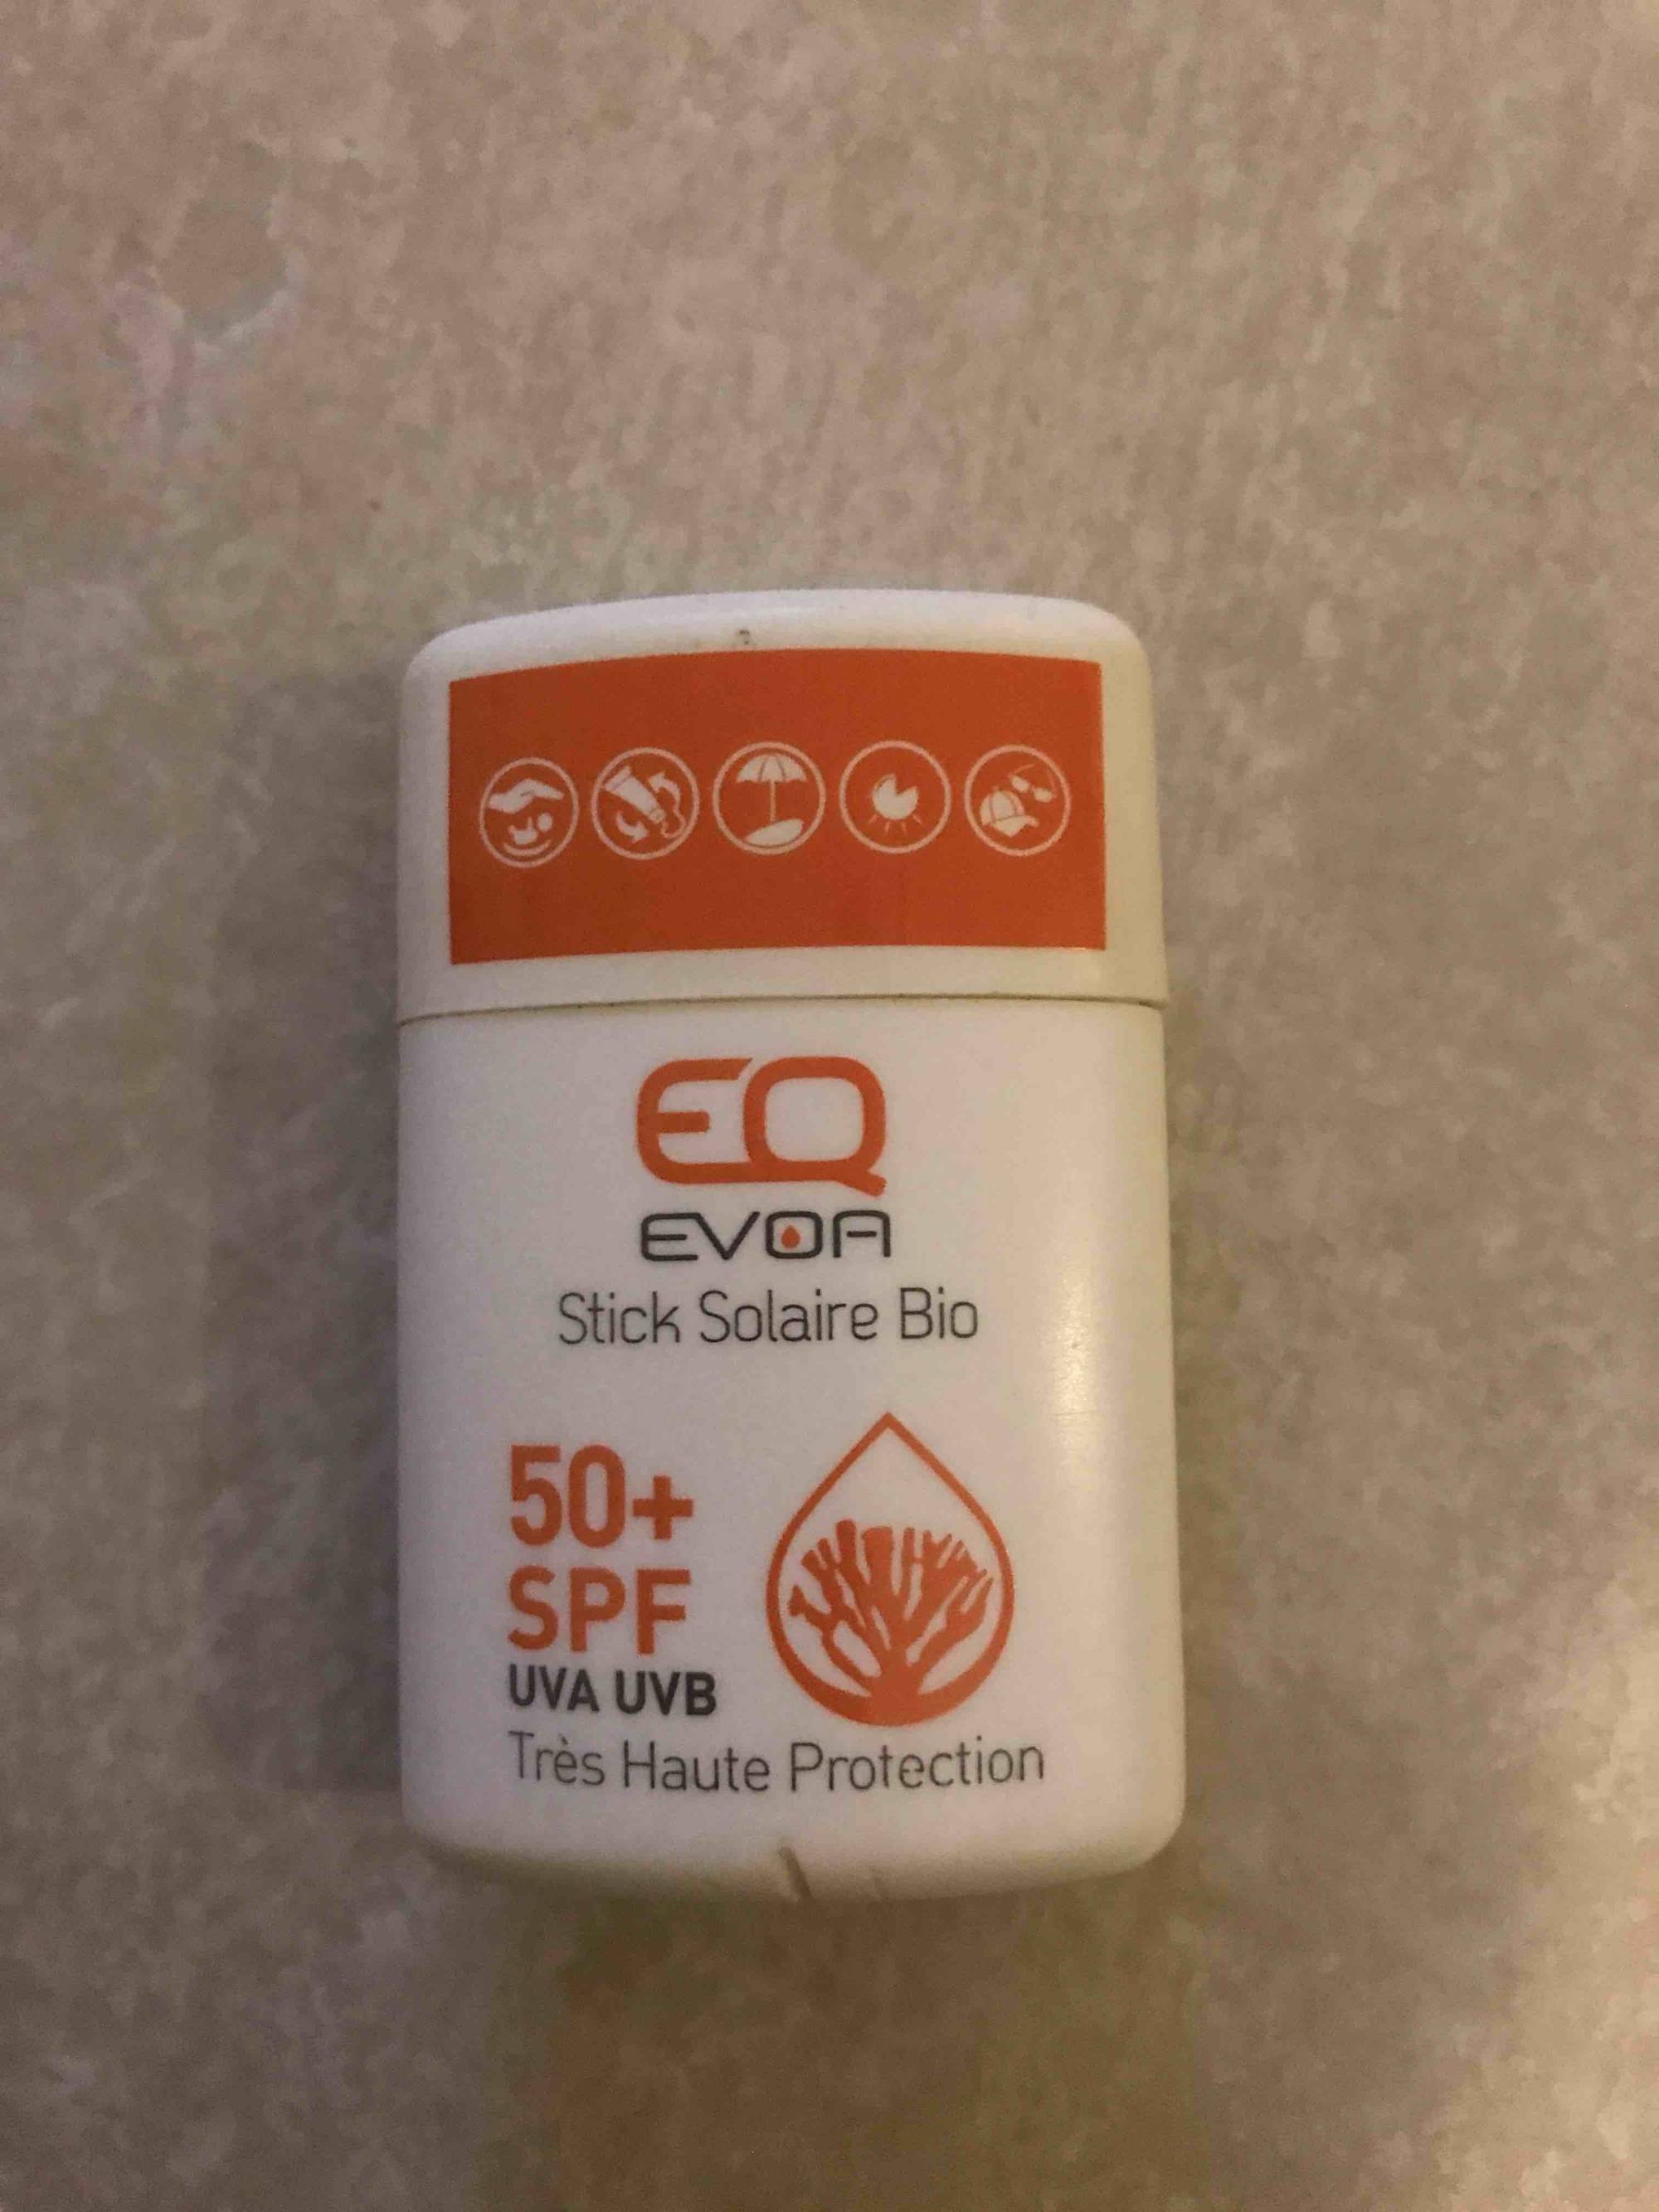 EQ EVOA - Stick solaire bio SPF 50+